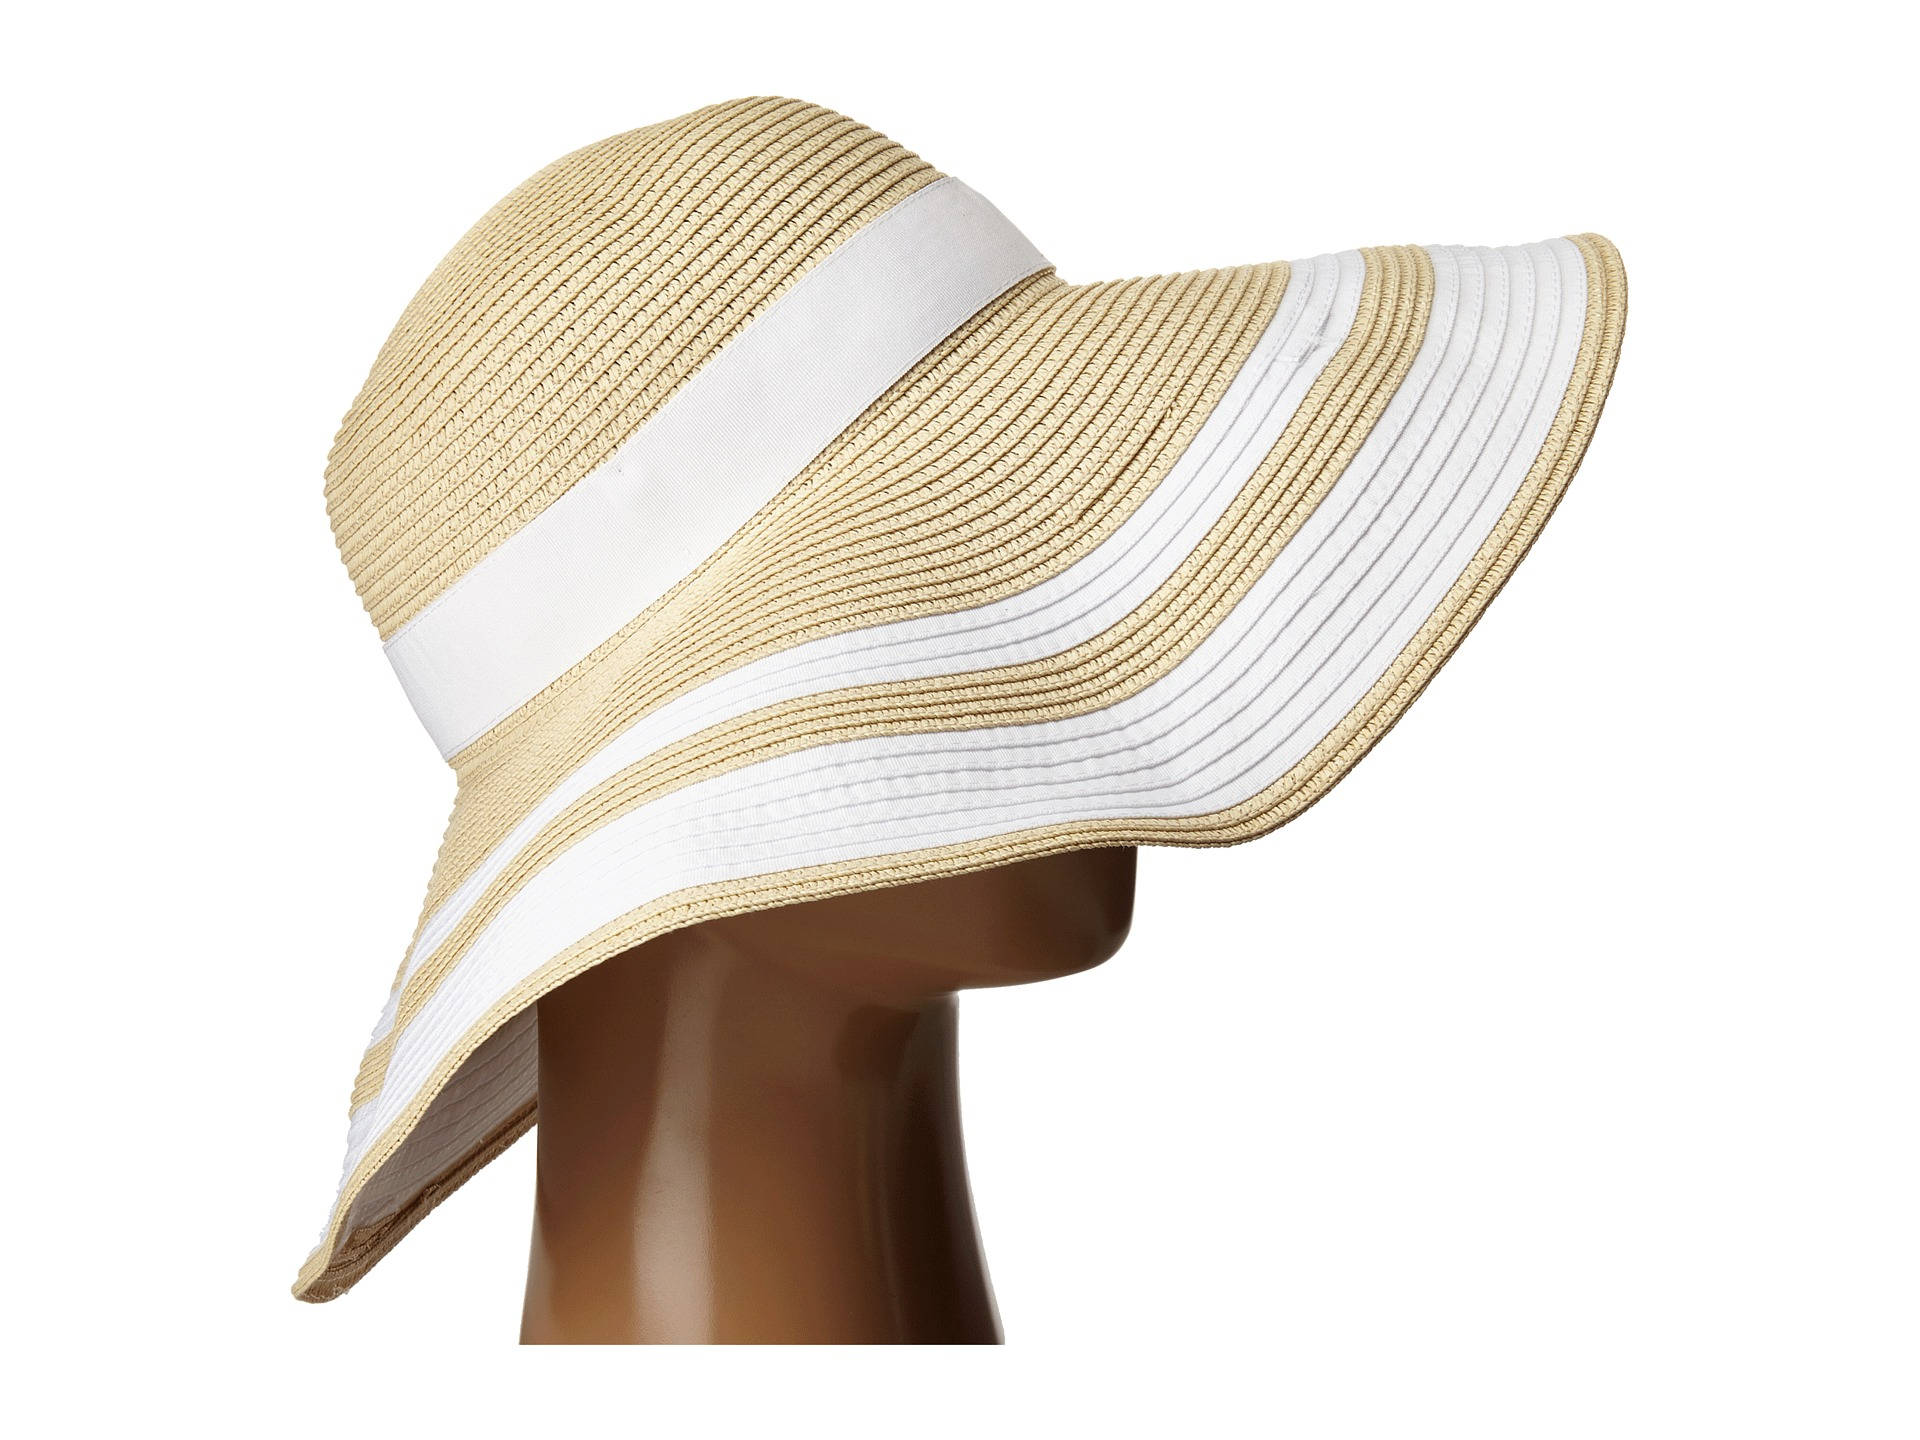 Lauren by ralph lauren Paper Straw Bright & Natural Sun Hat in Natural